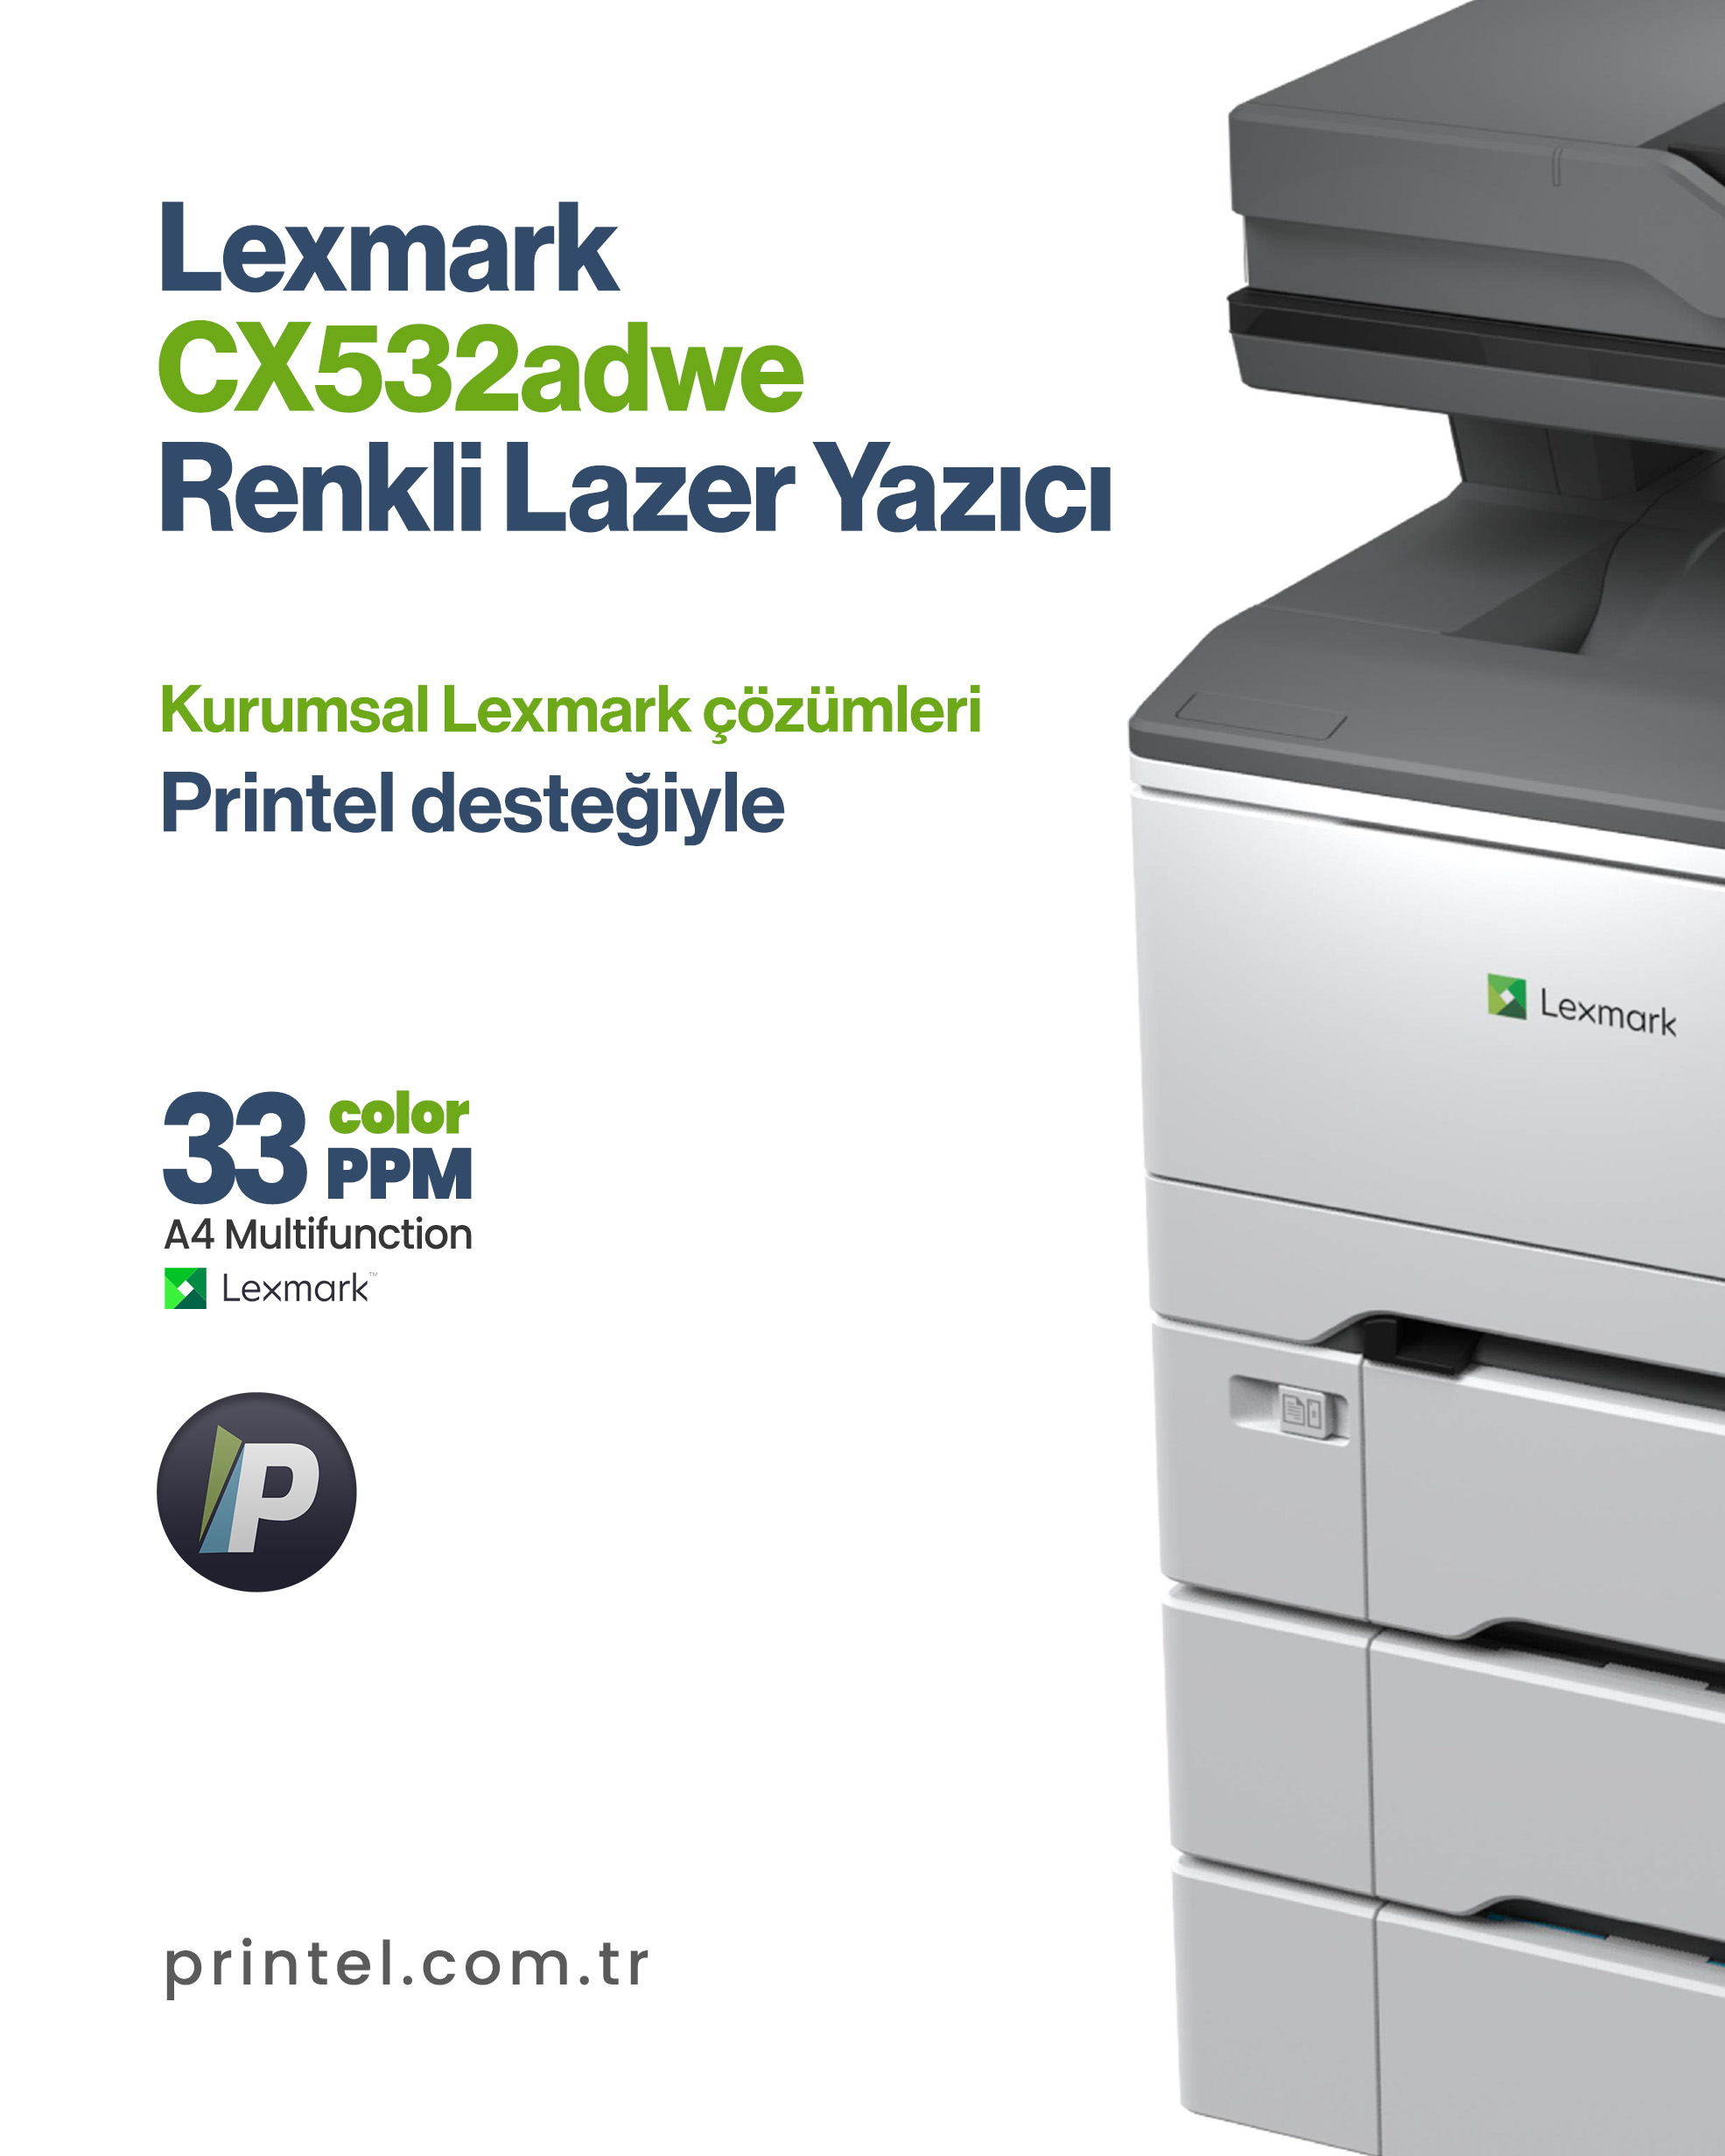 Lexmark CX532adwe 6